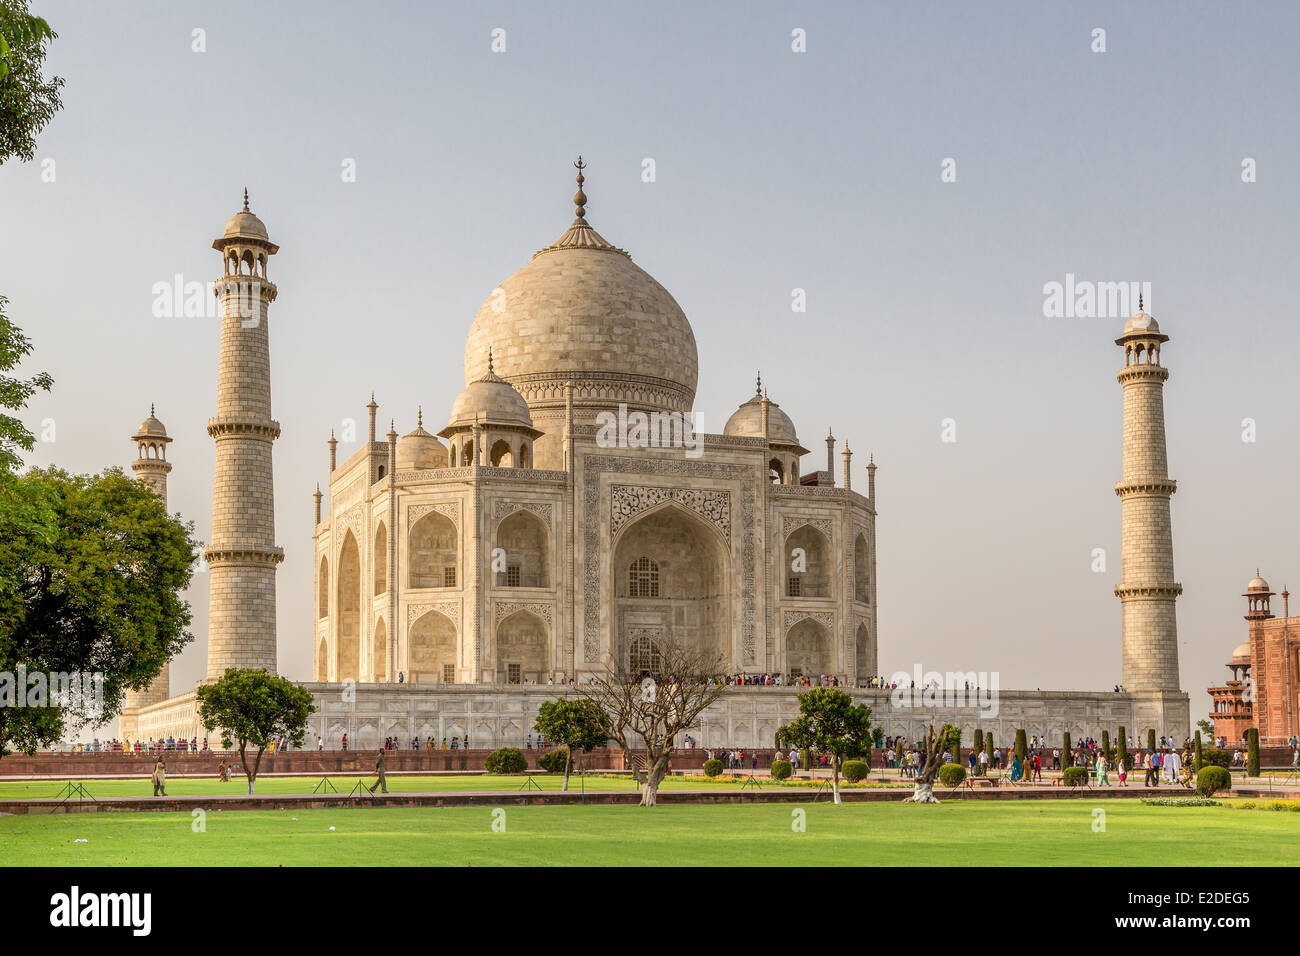 El Taj Mahal, un famoso monumento histórico en la India Foto de stock